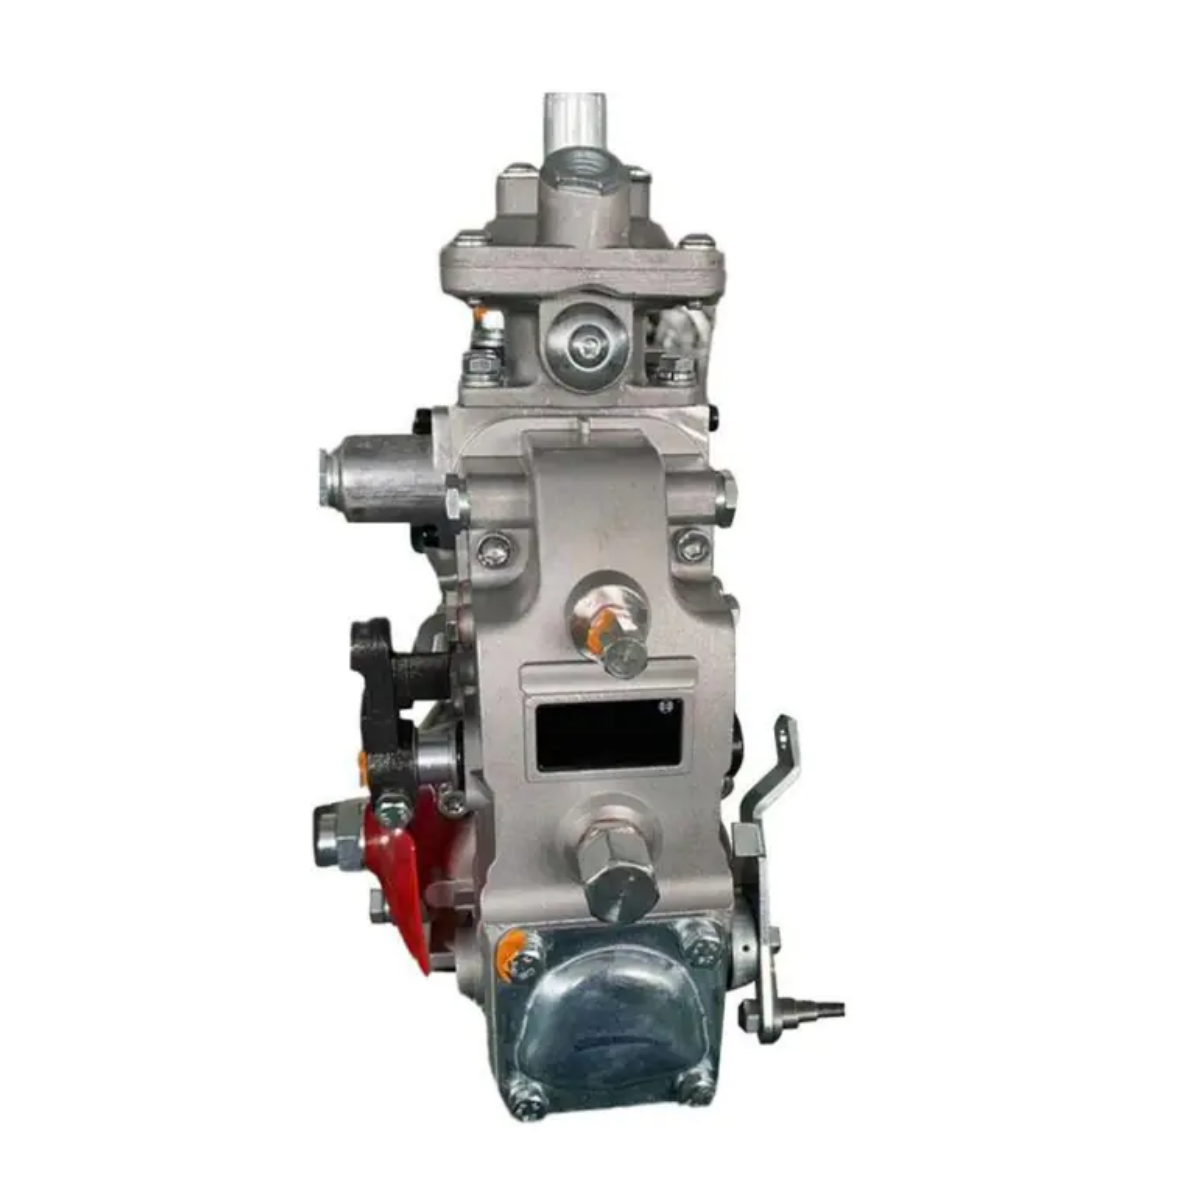 6743-71-1131 Fuel Injection Pump for Komatsu PC300-7 PC360-7 Excavator - Sinocmp